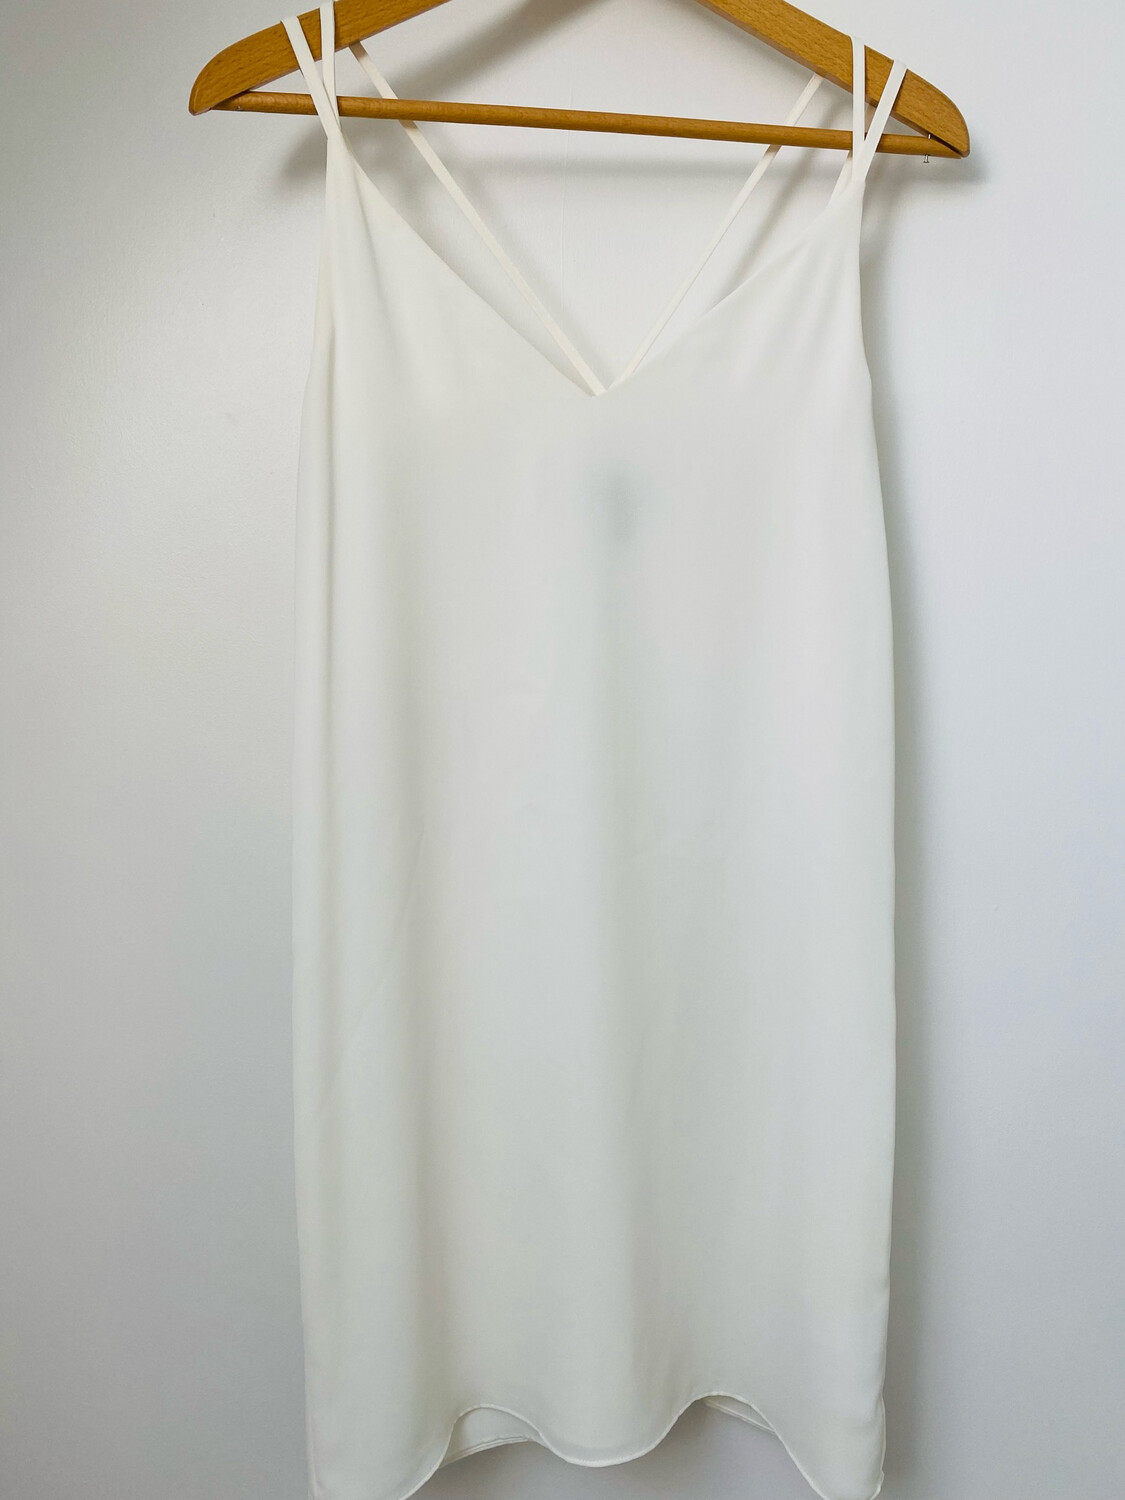 Topshop Short Slip Dress Size 8 White